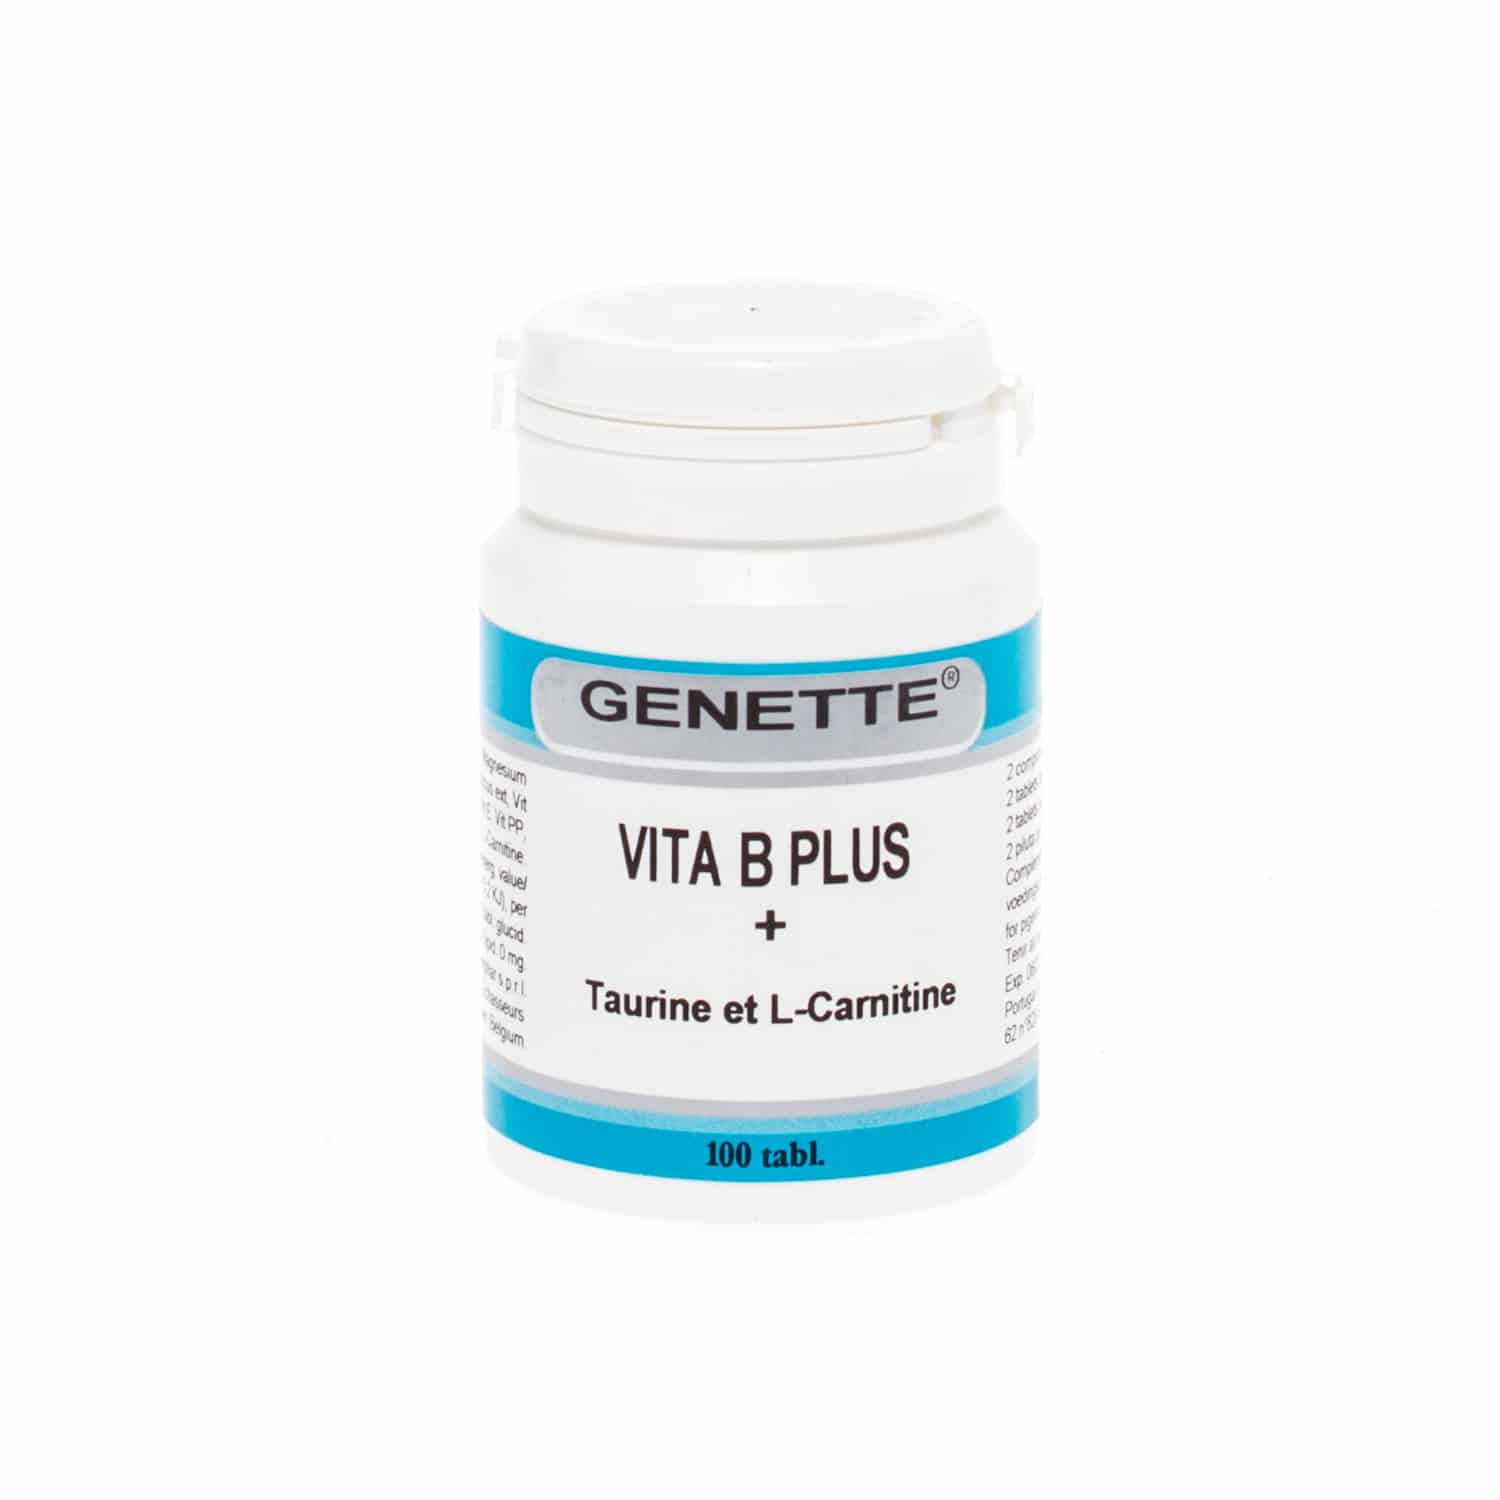 Genette Vita B Plus + Taurine + Carnitine